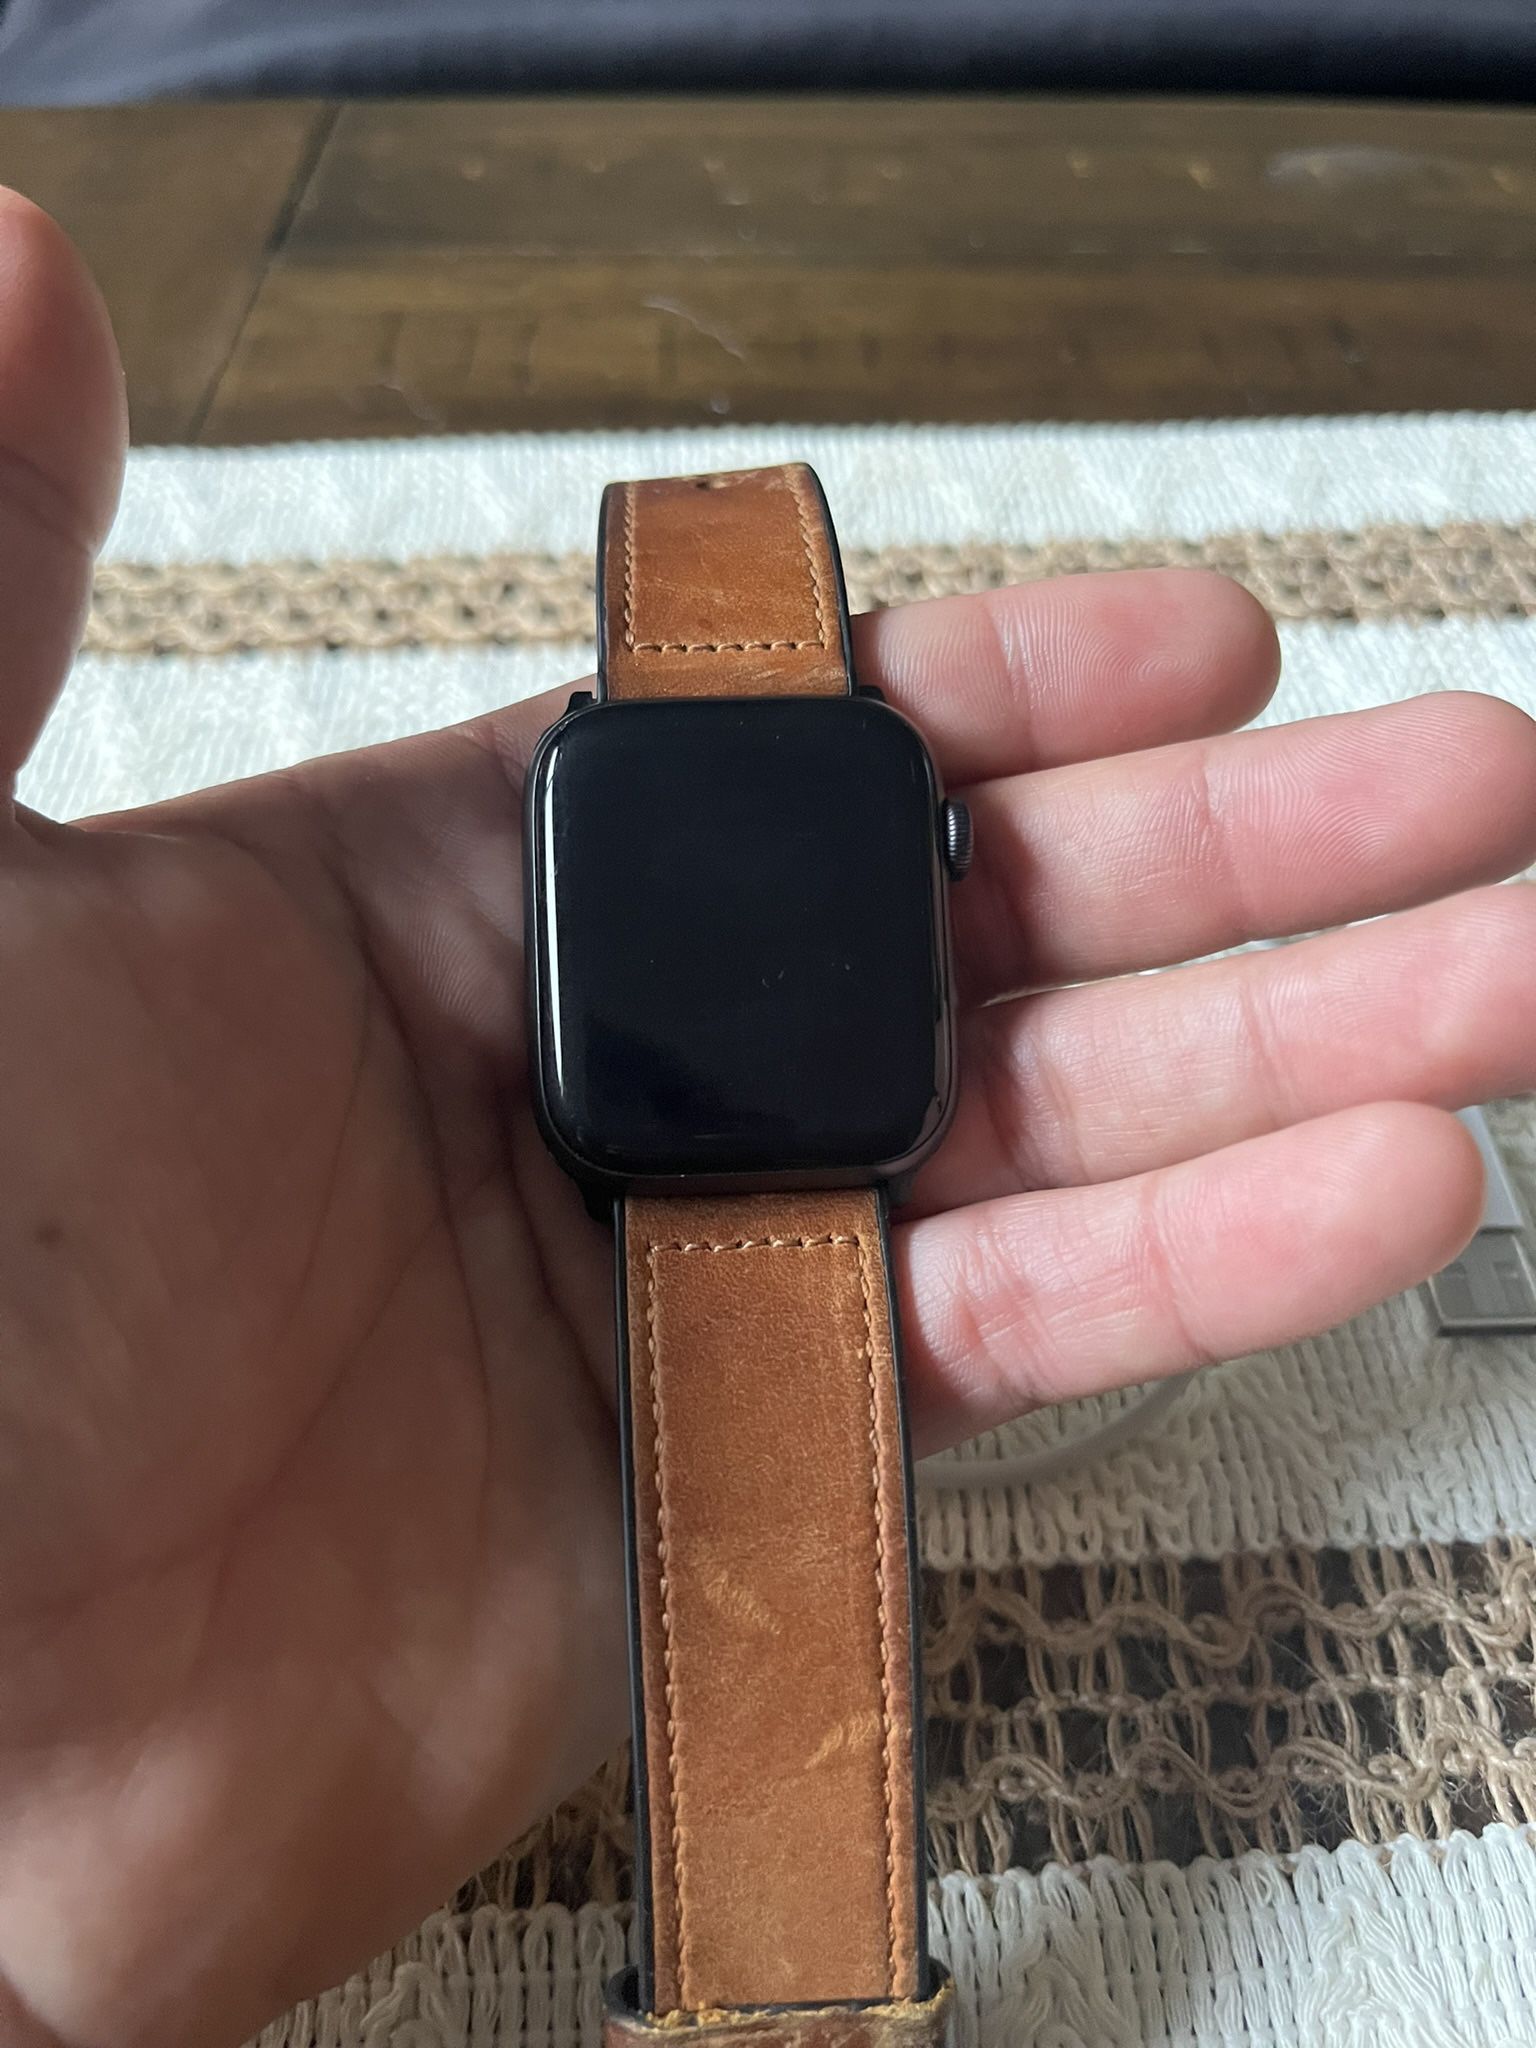 Apple Watch SE (44mm) - Space Gray Aluminum Case